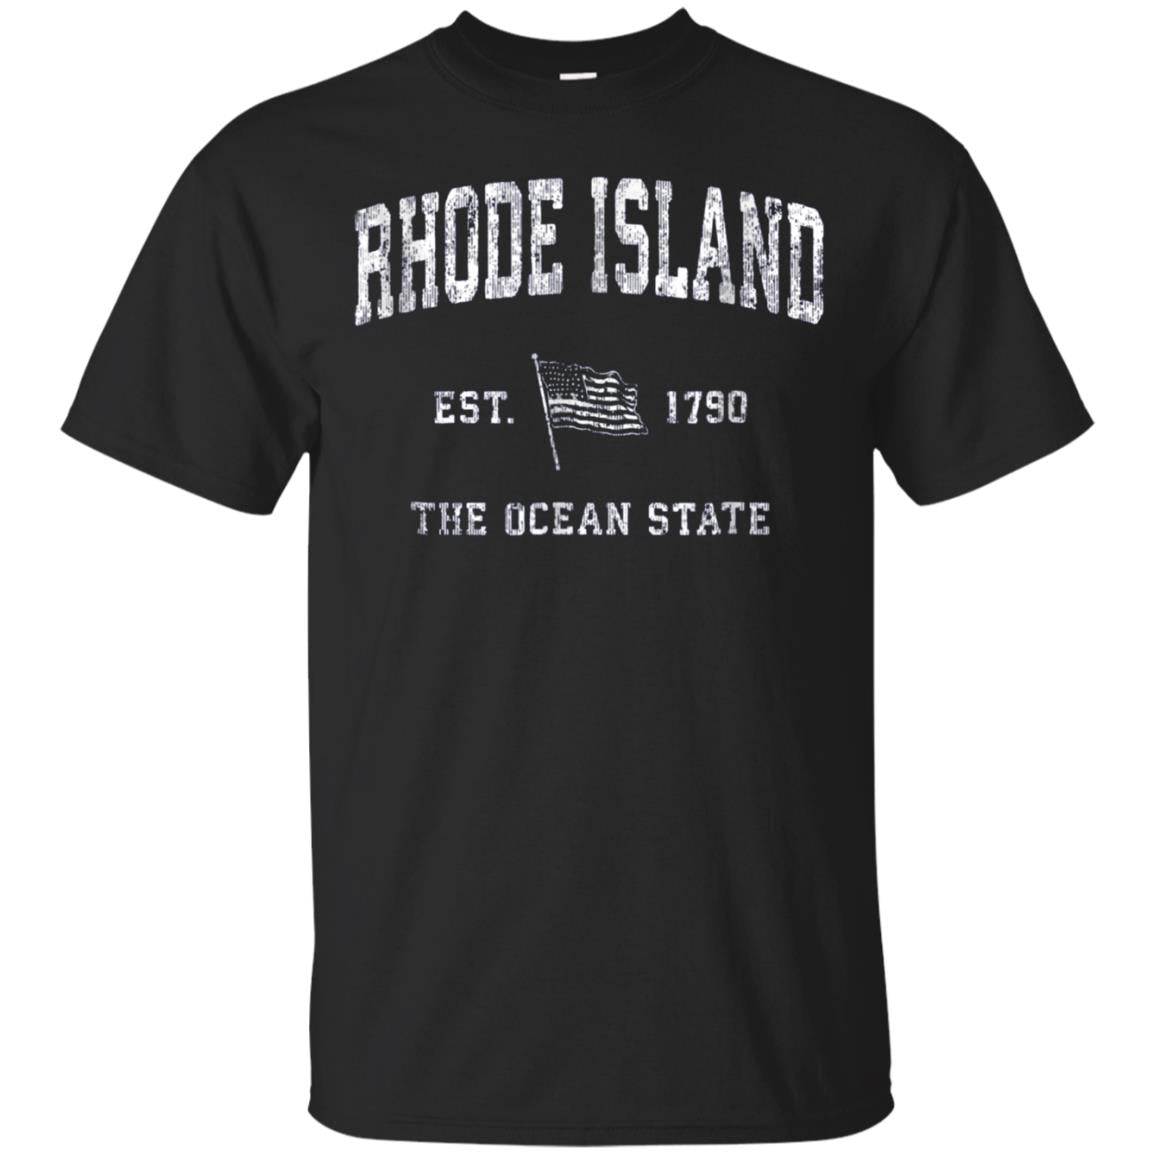 Rhode Island T-shirt Vintage Us Flag Sports Design Tee